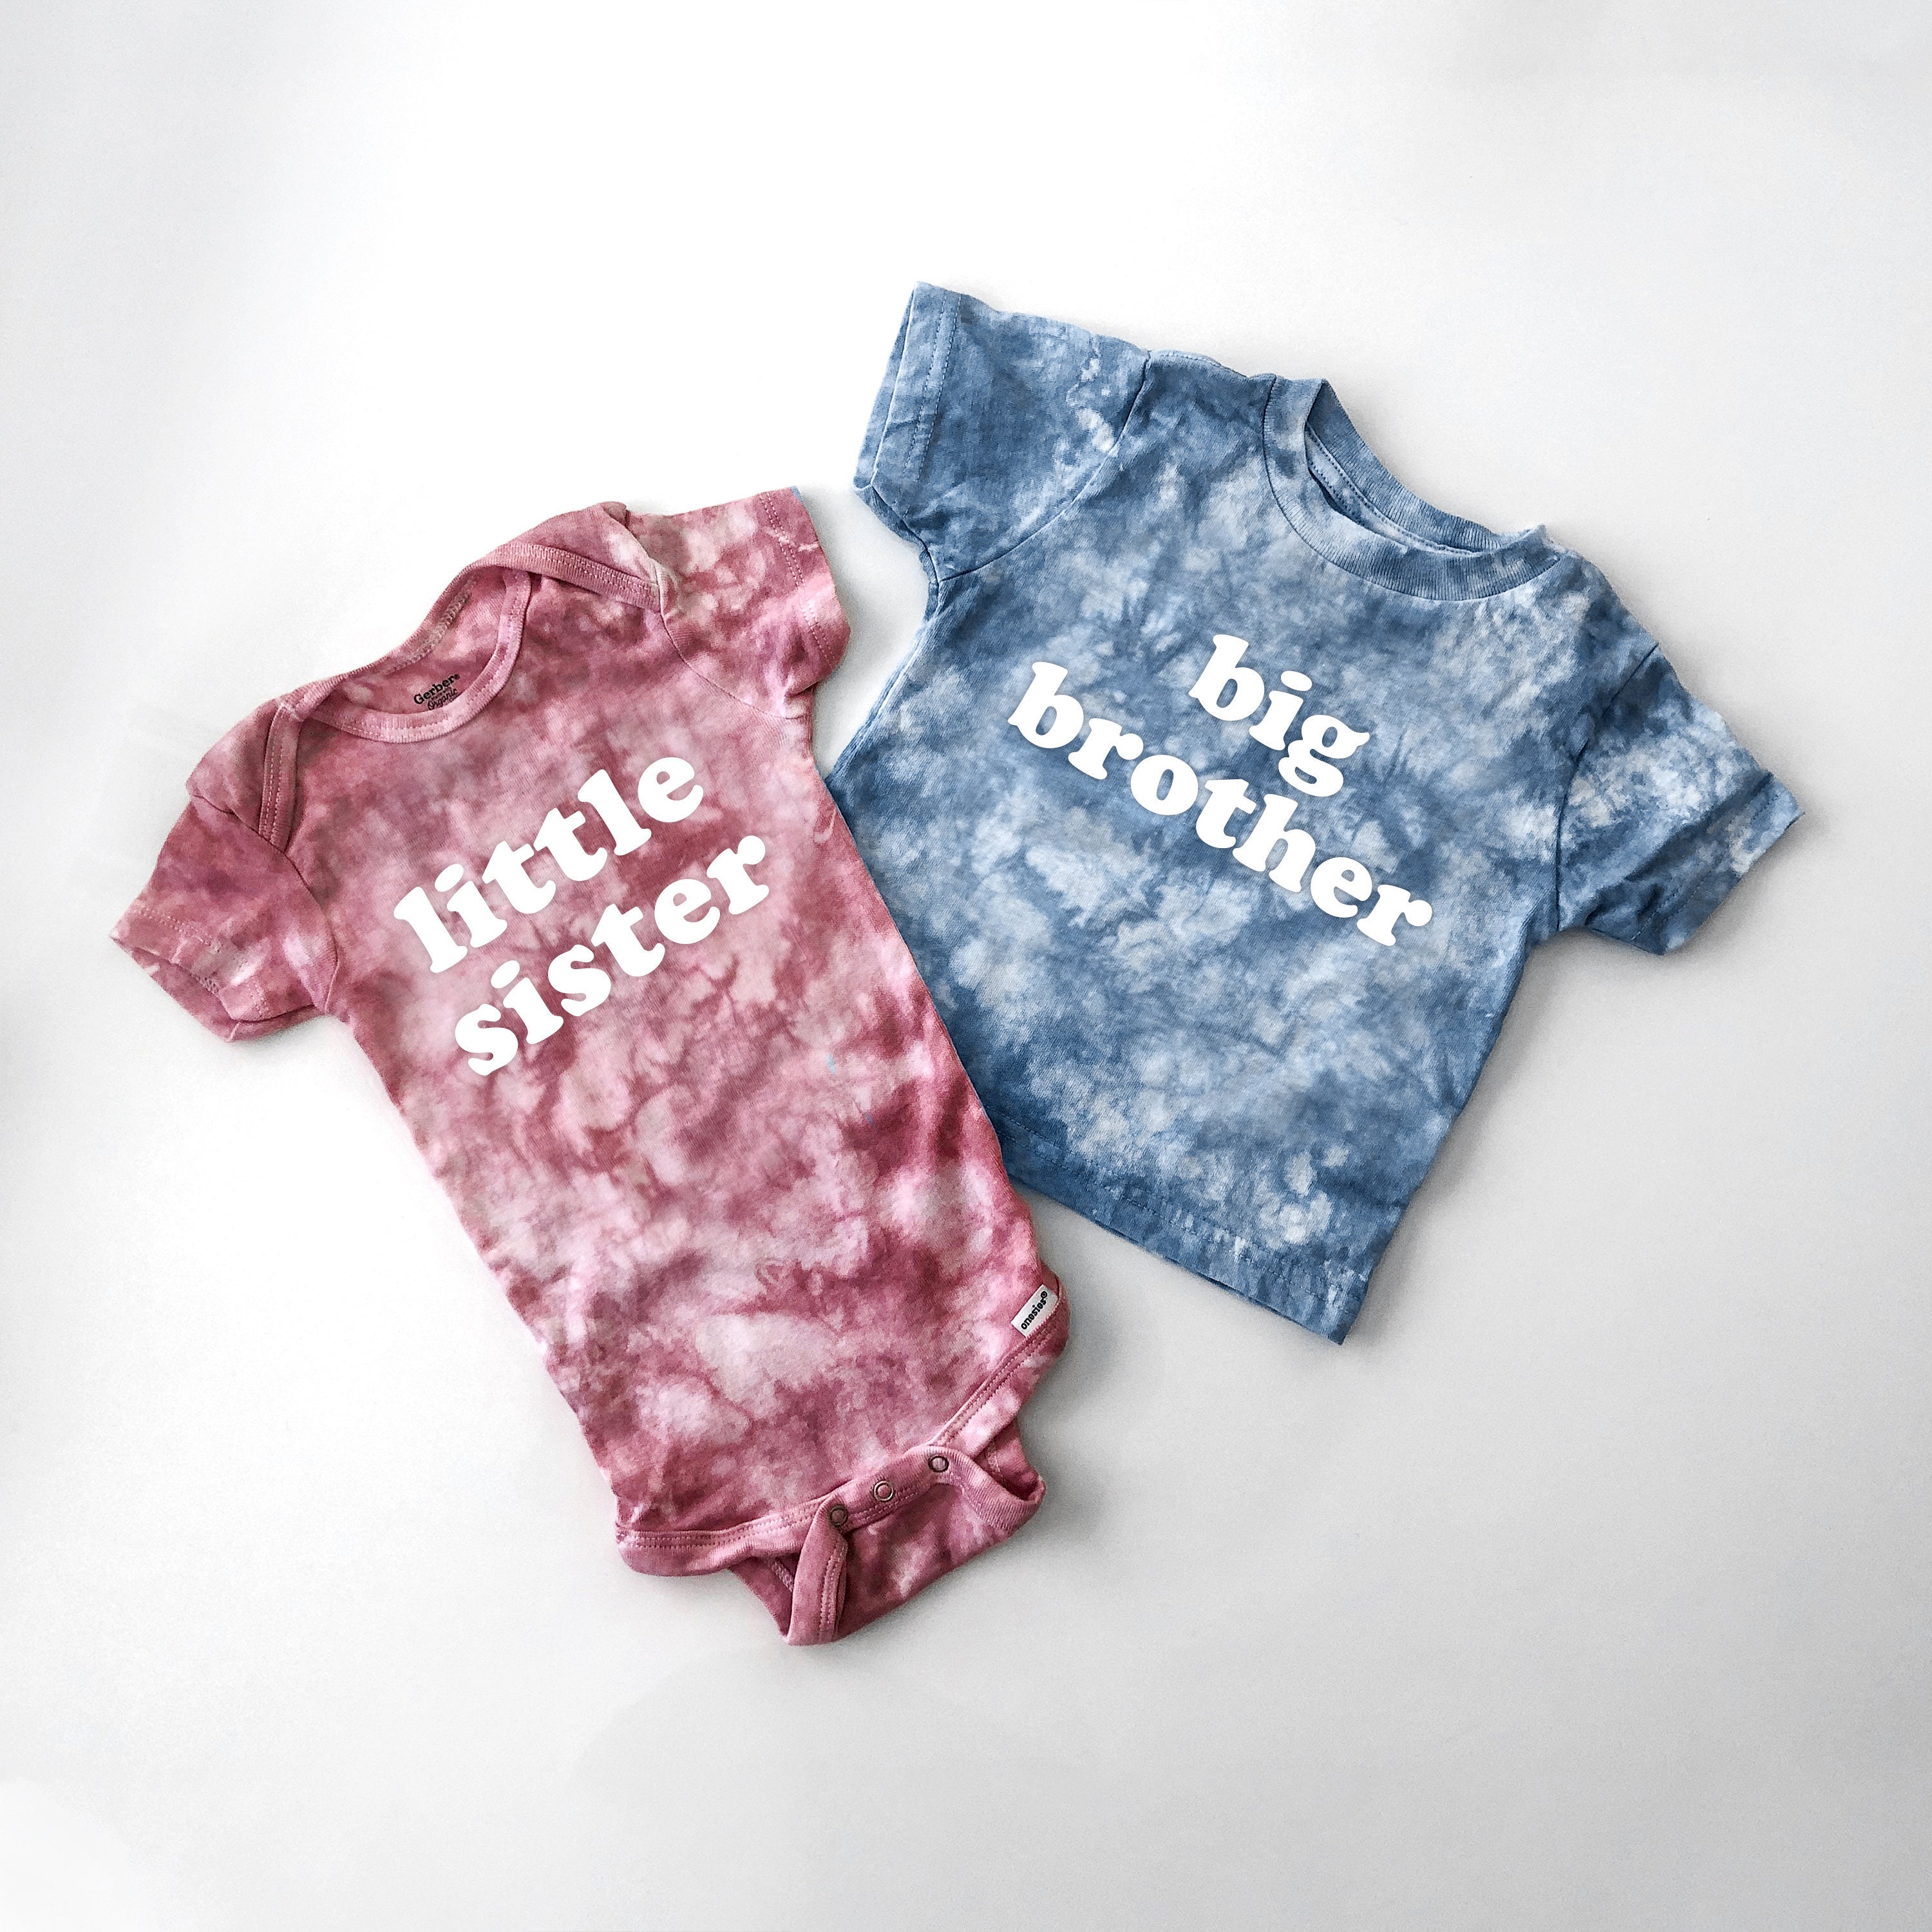 Tie dye kid's T-Shirt - Big Bro/Big Sis – Blue Leaf Designs